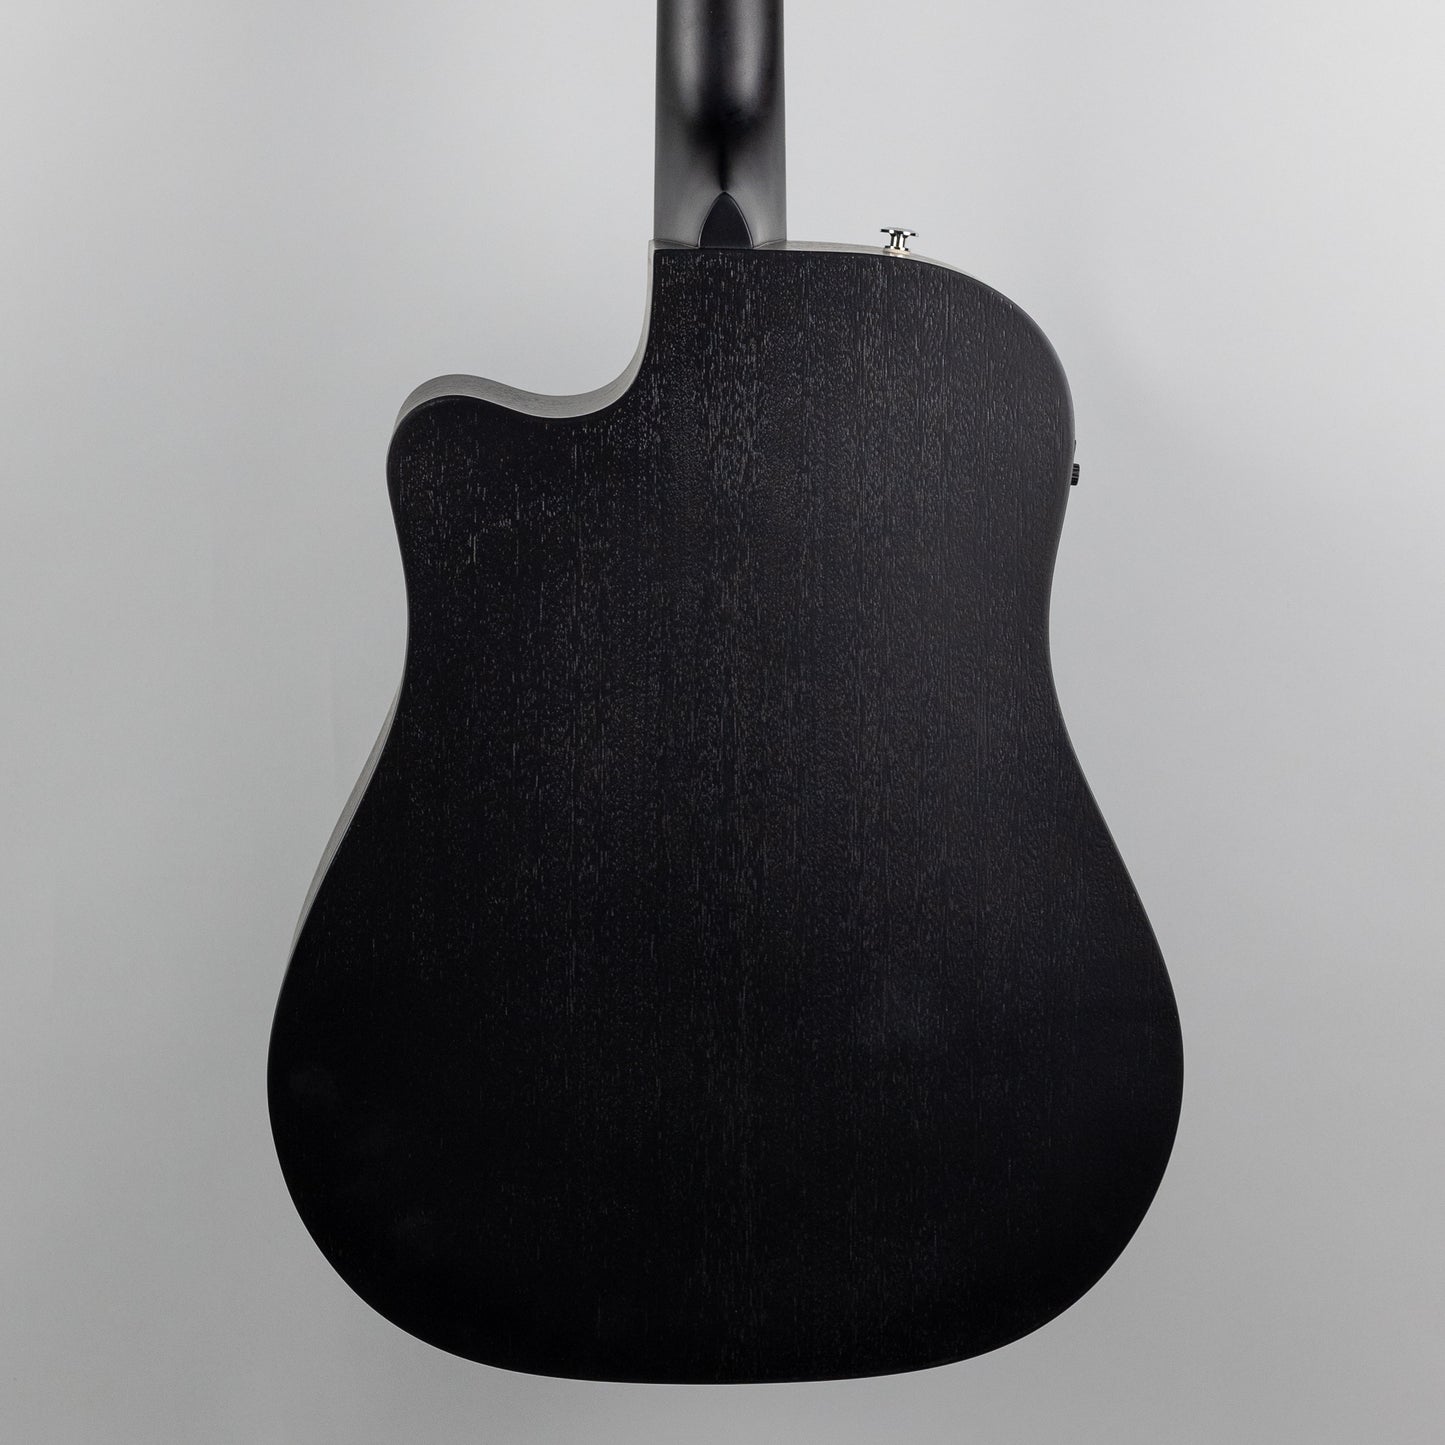 Ibanez ALT20-WK Altstar Acoustic/Electric Guitar in Weathered Black Open Pore